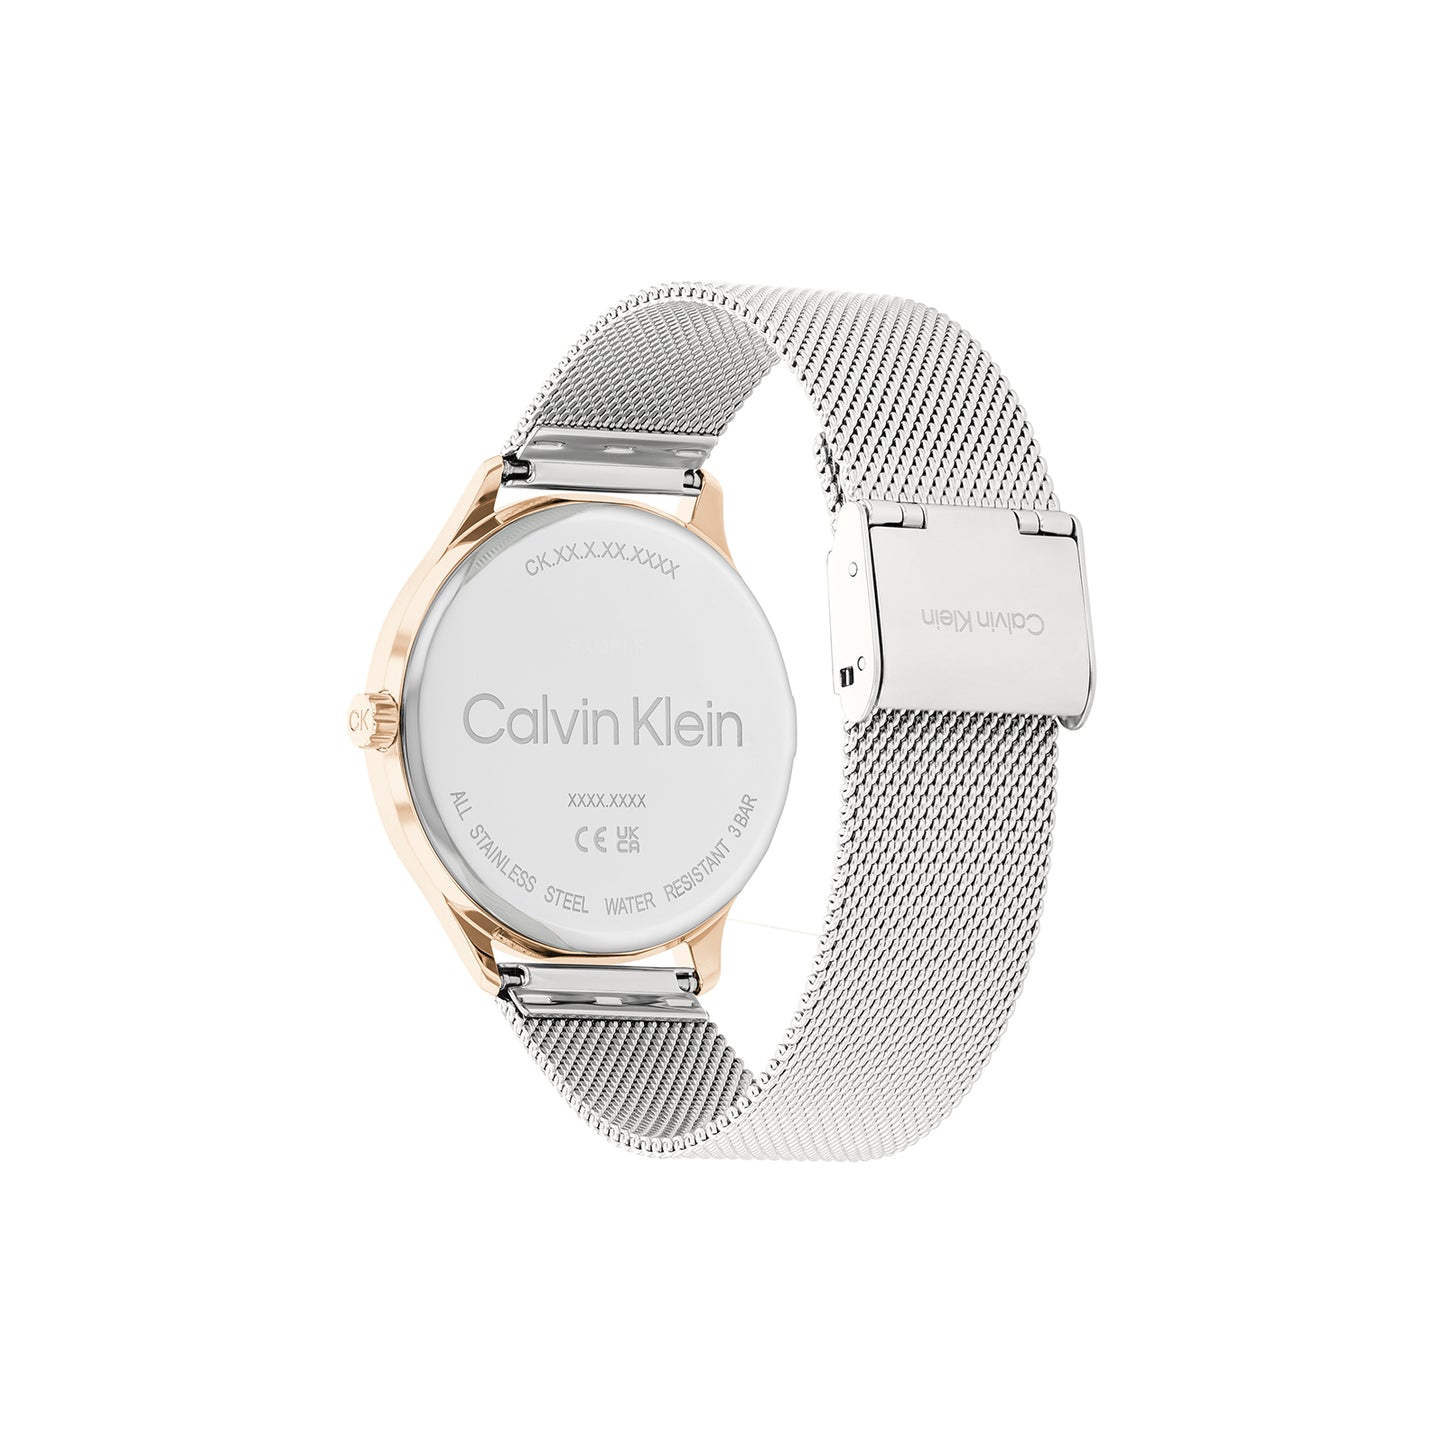 Calvin Klein 25200374 Women's Steel Mesh Watch